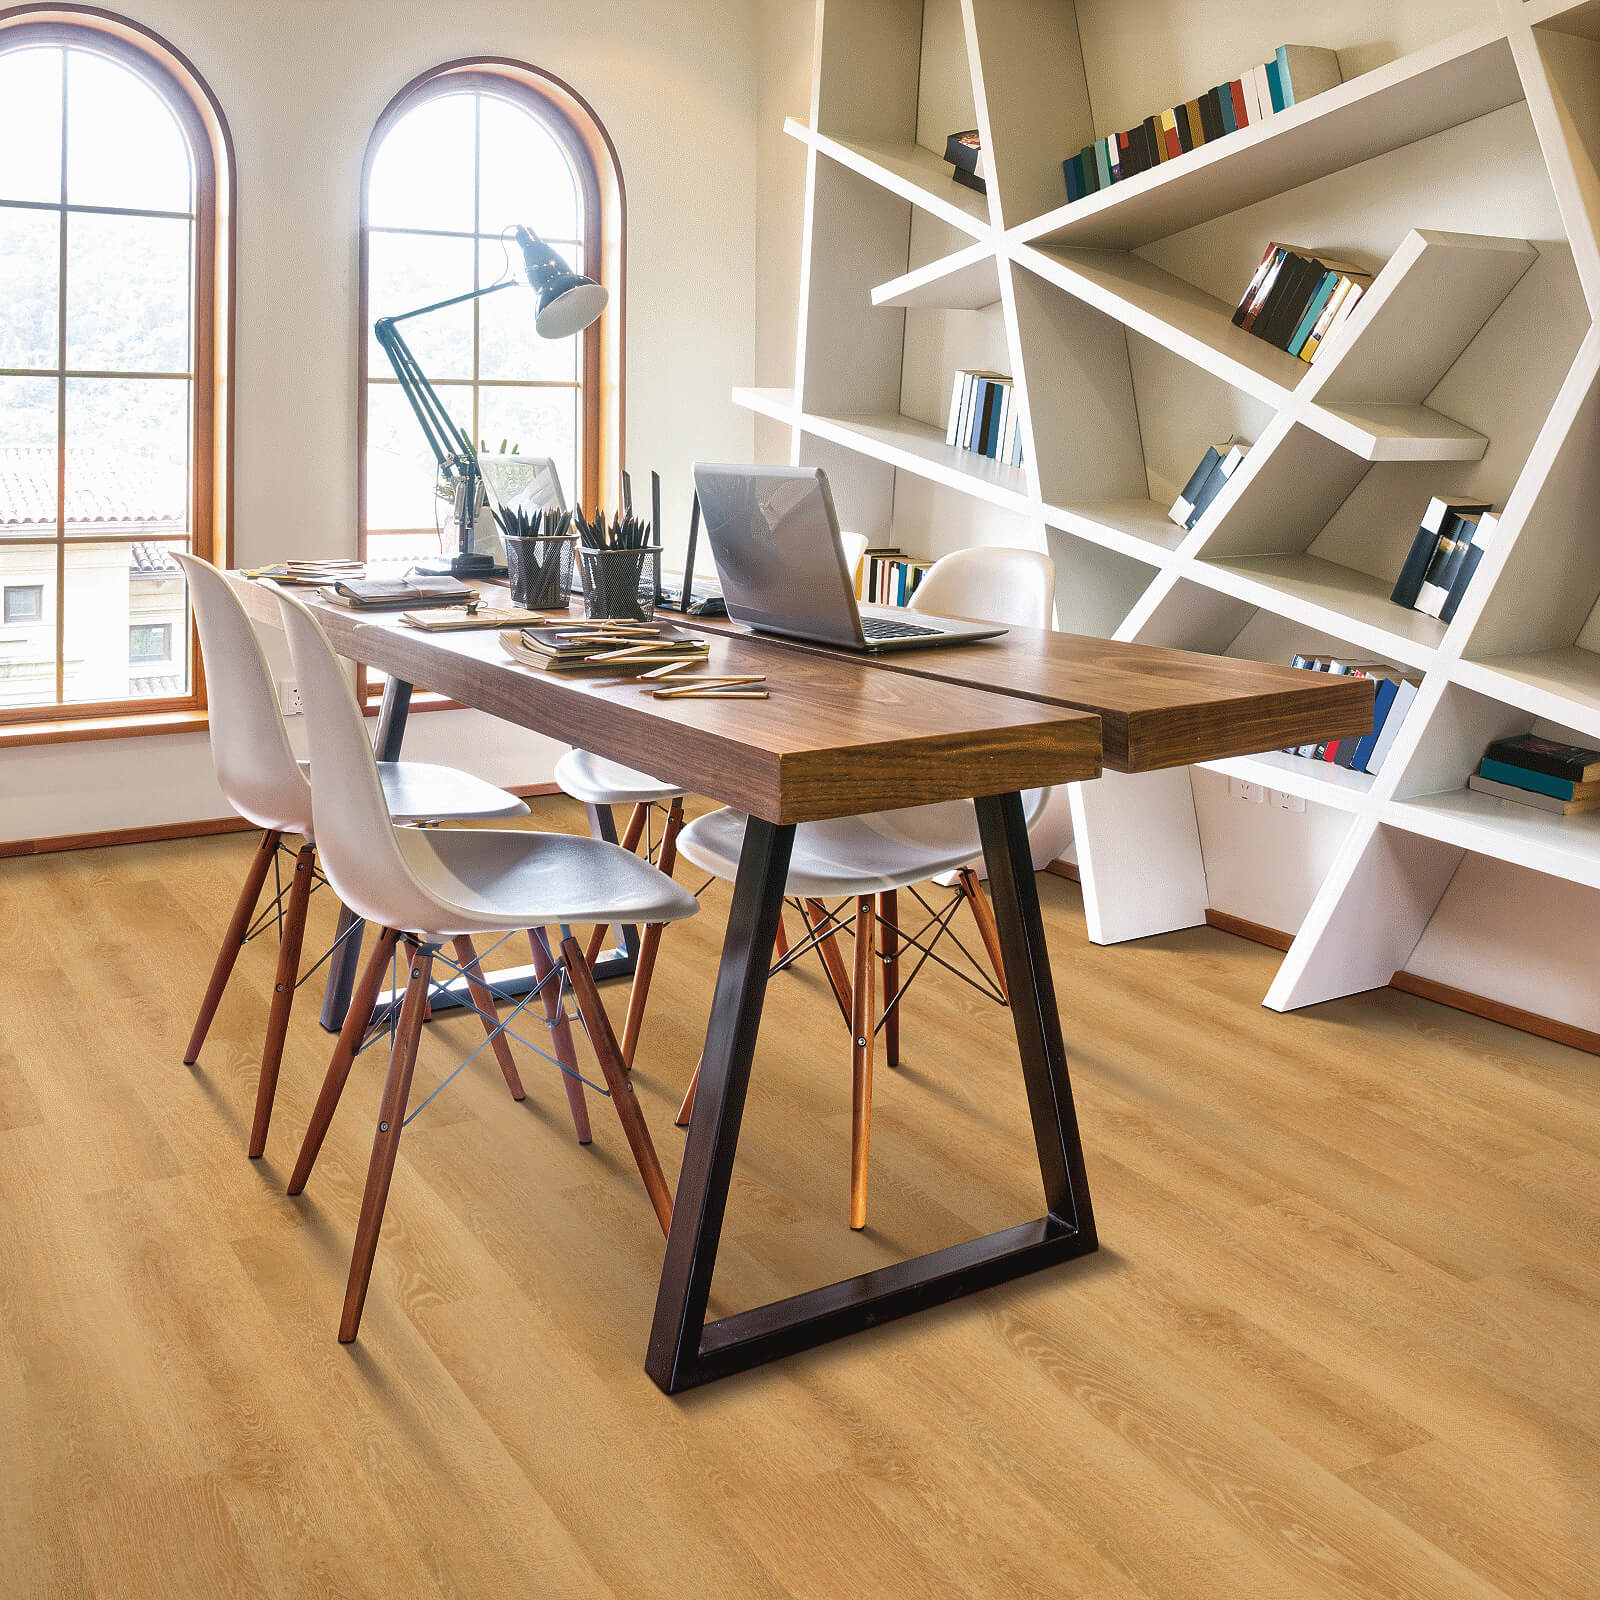 Vinyl flooring for study room | CarpetsPlus COLORTILE of Wyoming